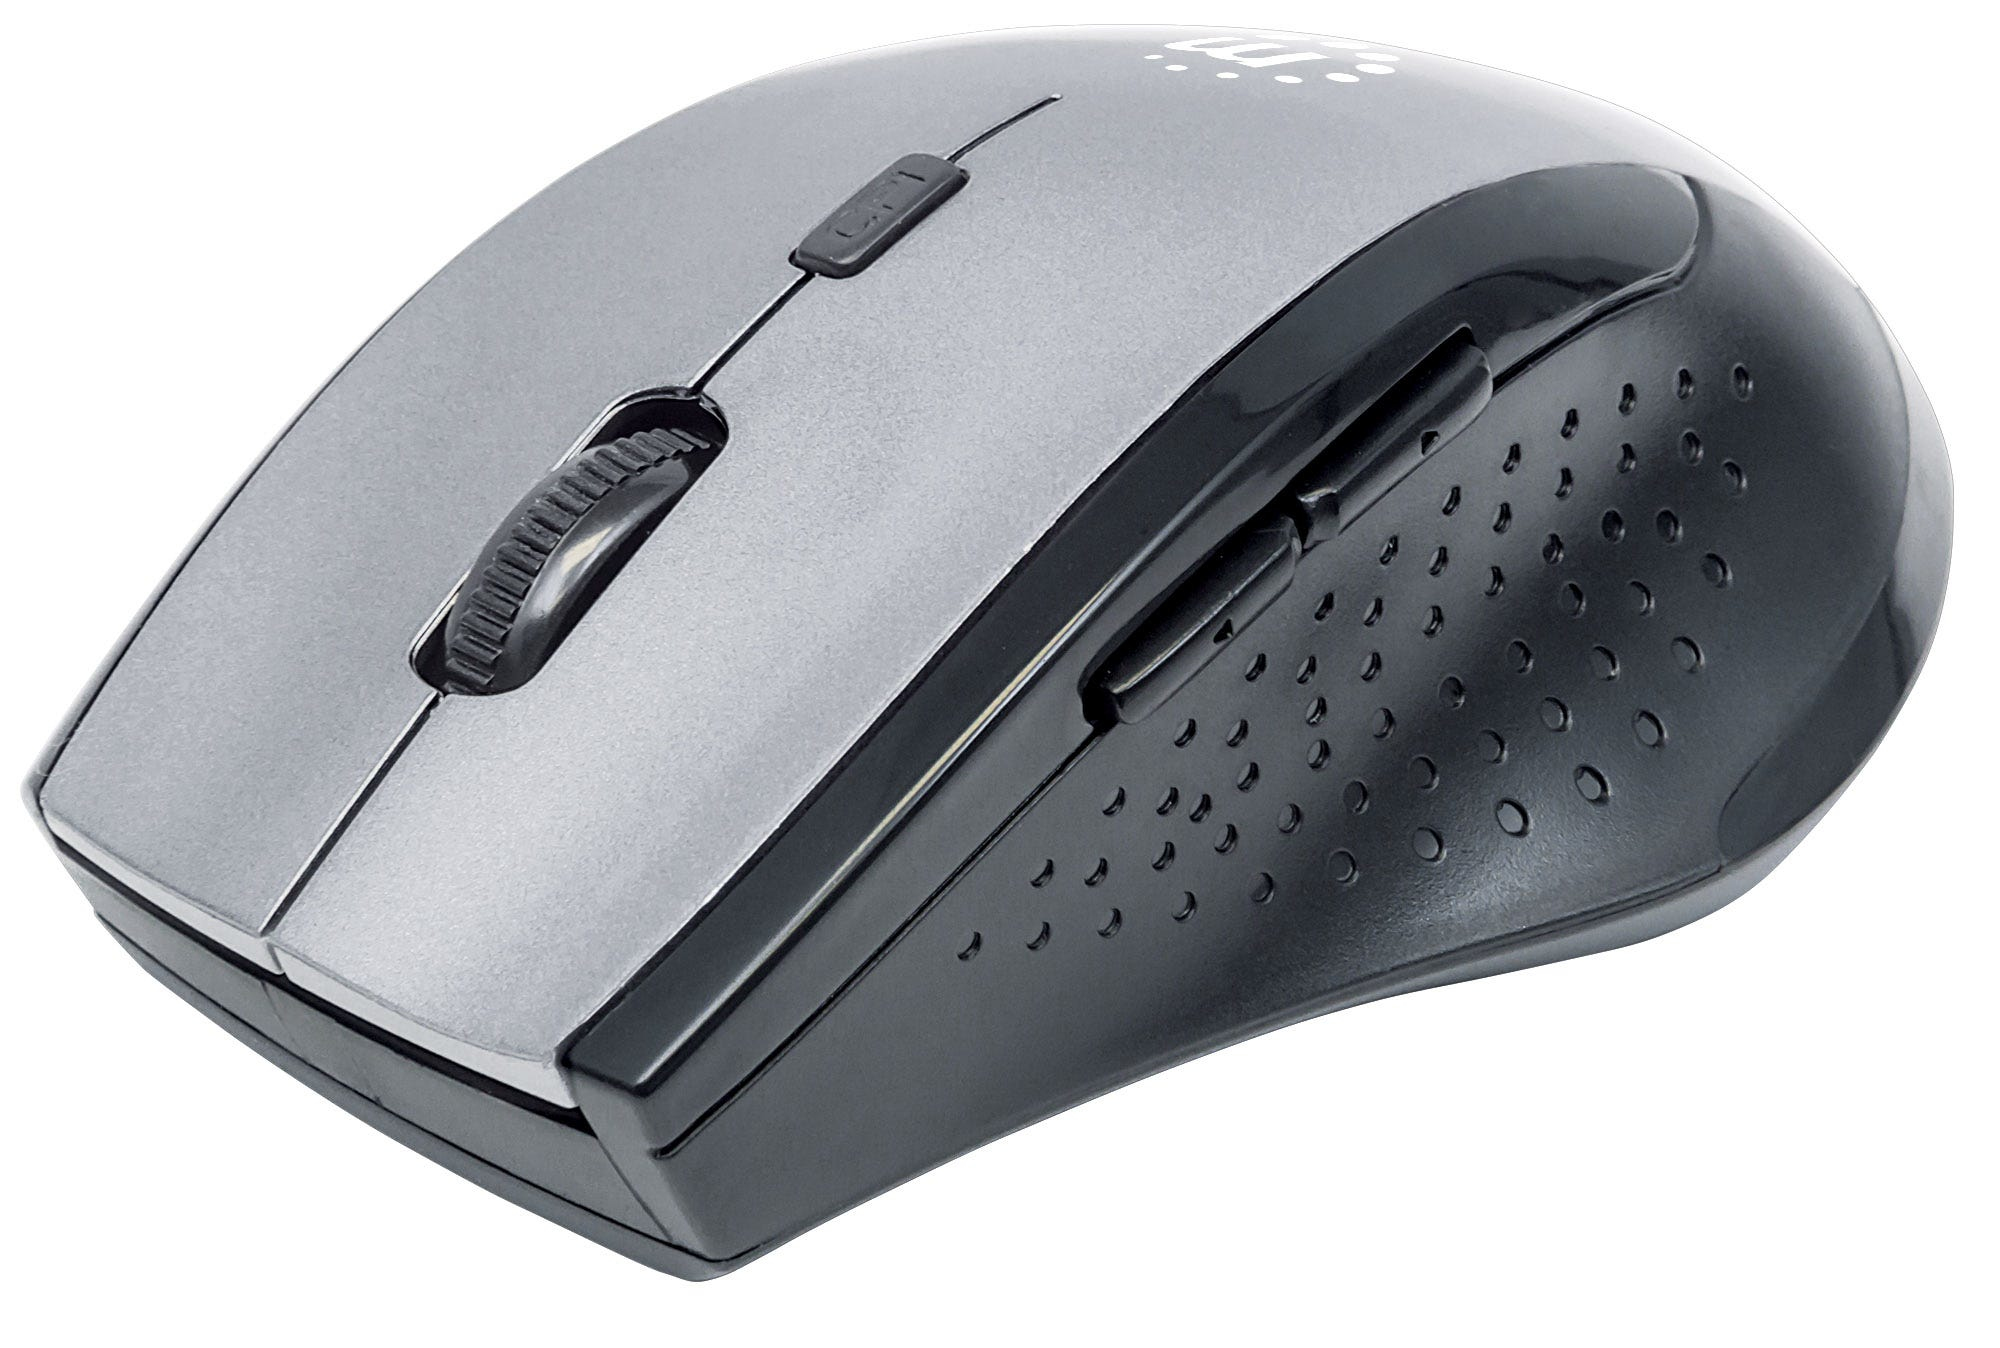 Manhattan Curve Wireless Mouse, Grey/Black, Adjustable DPI (800, 1200 or 1600dpi)